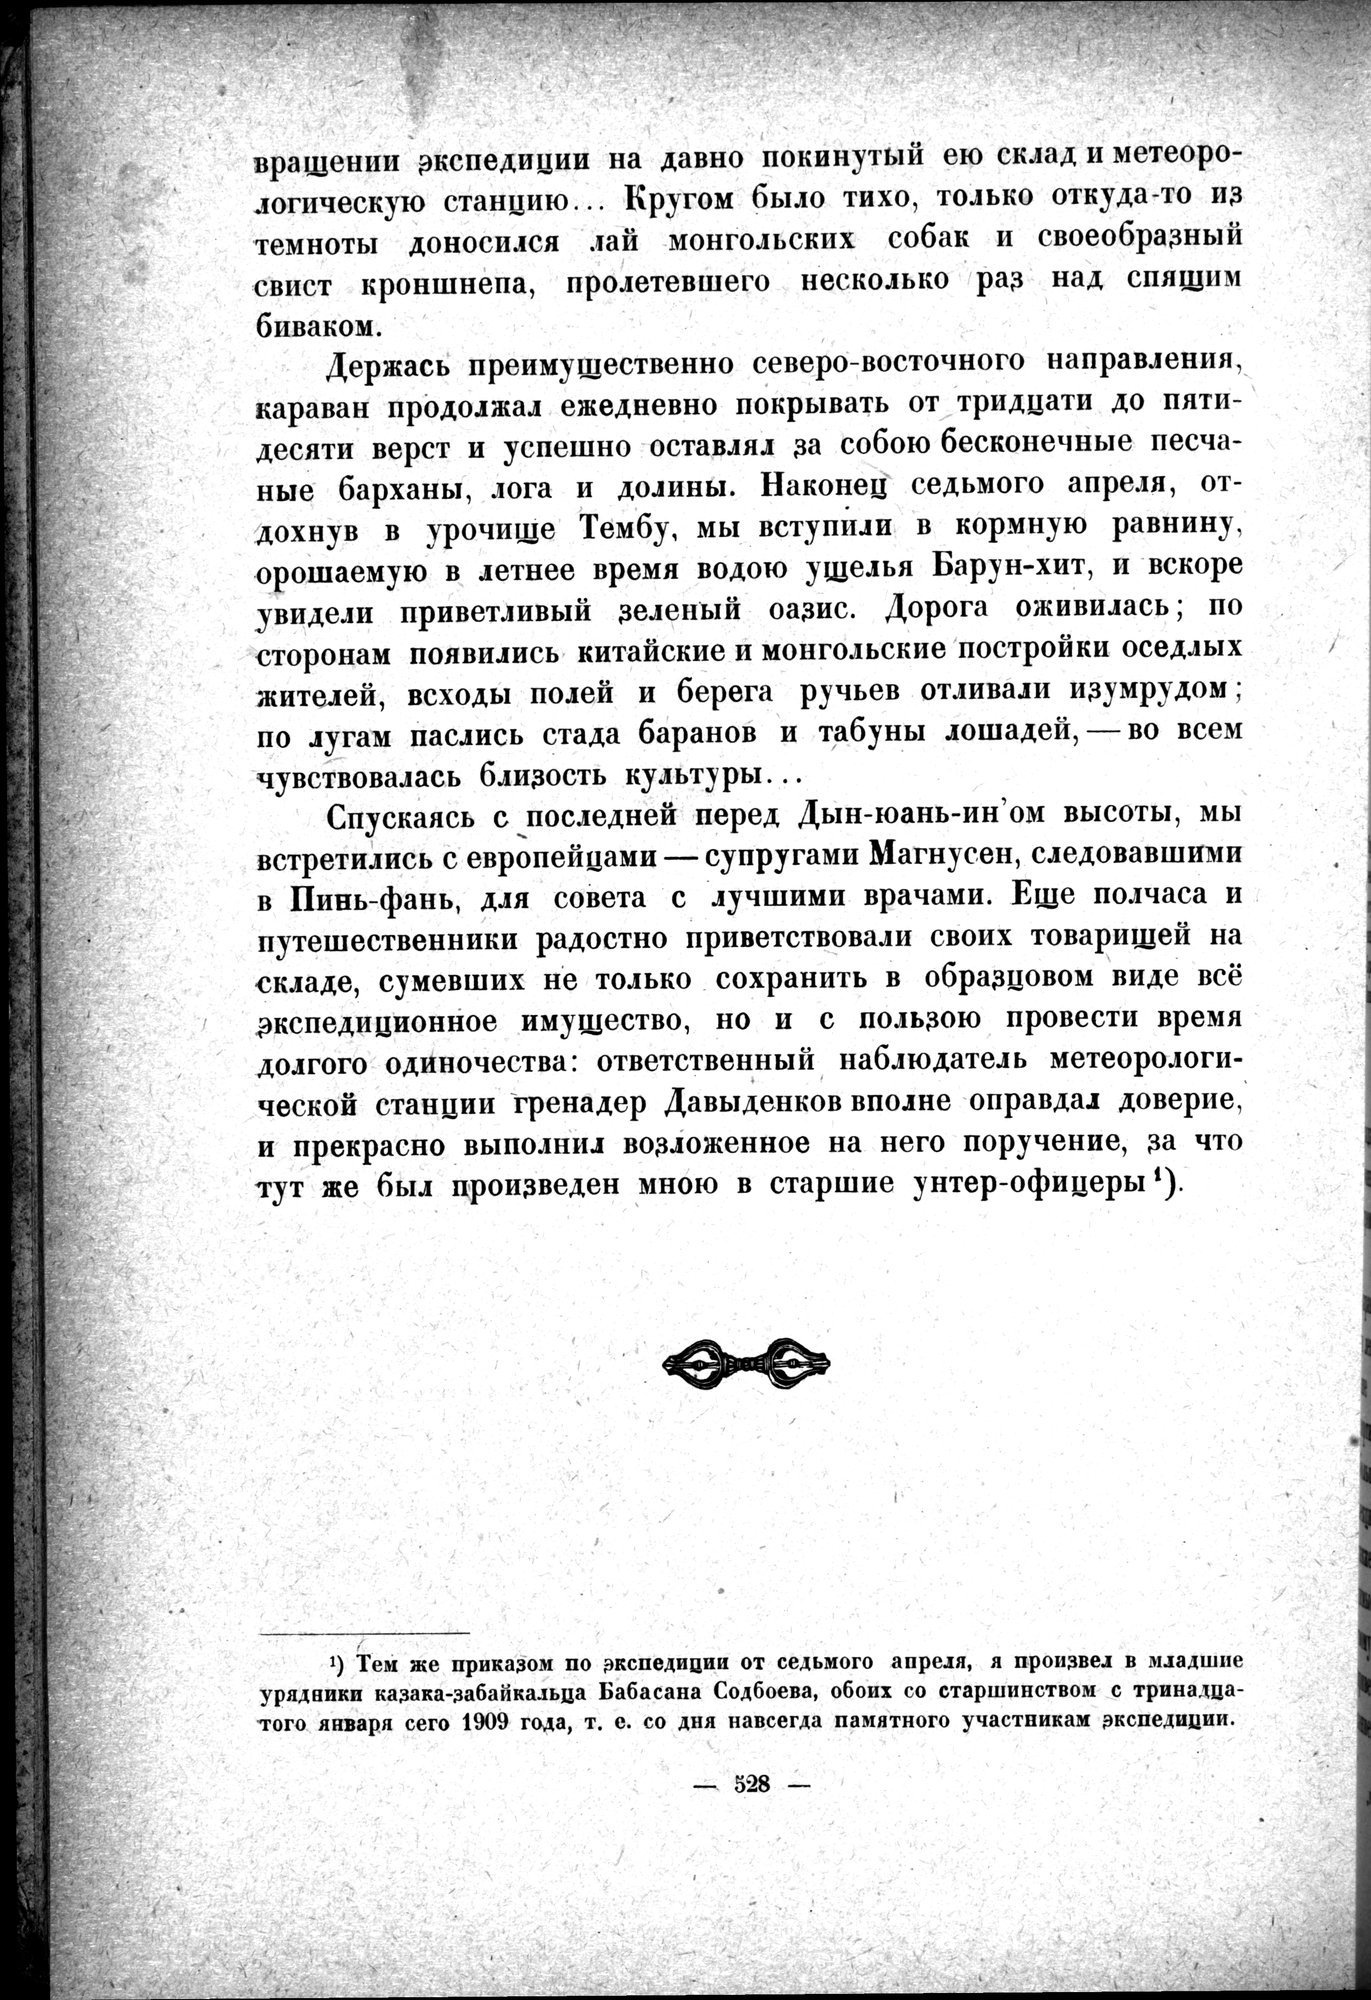 Mongoliya i Amdo i mertby gorod Khara-Khoto : vol.1 / Page 612 (Grayscale High Resolution Image)